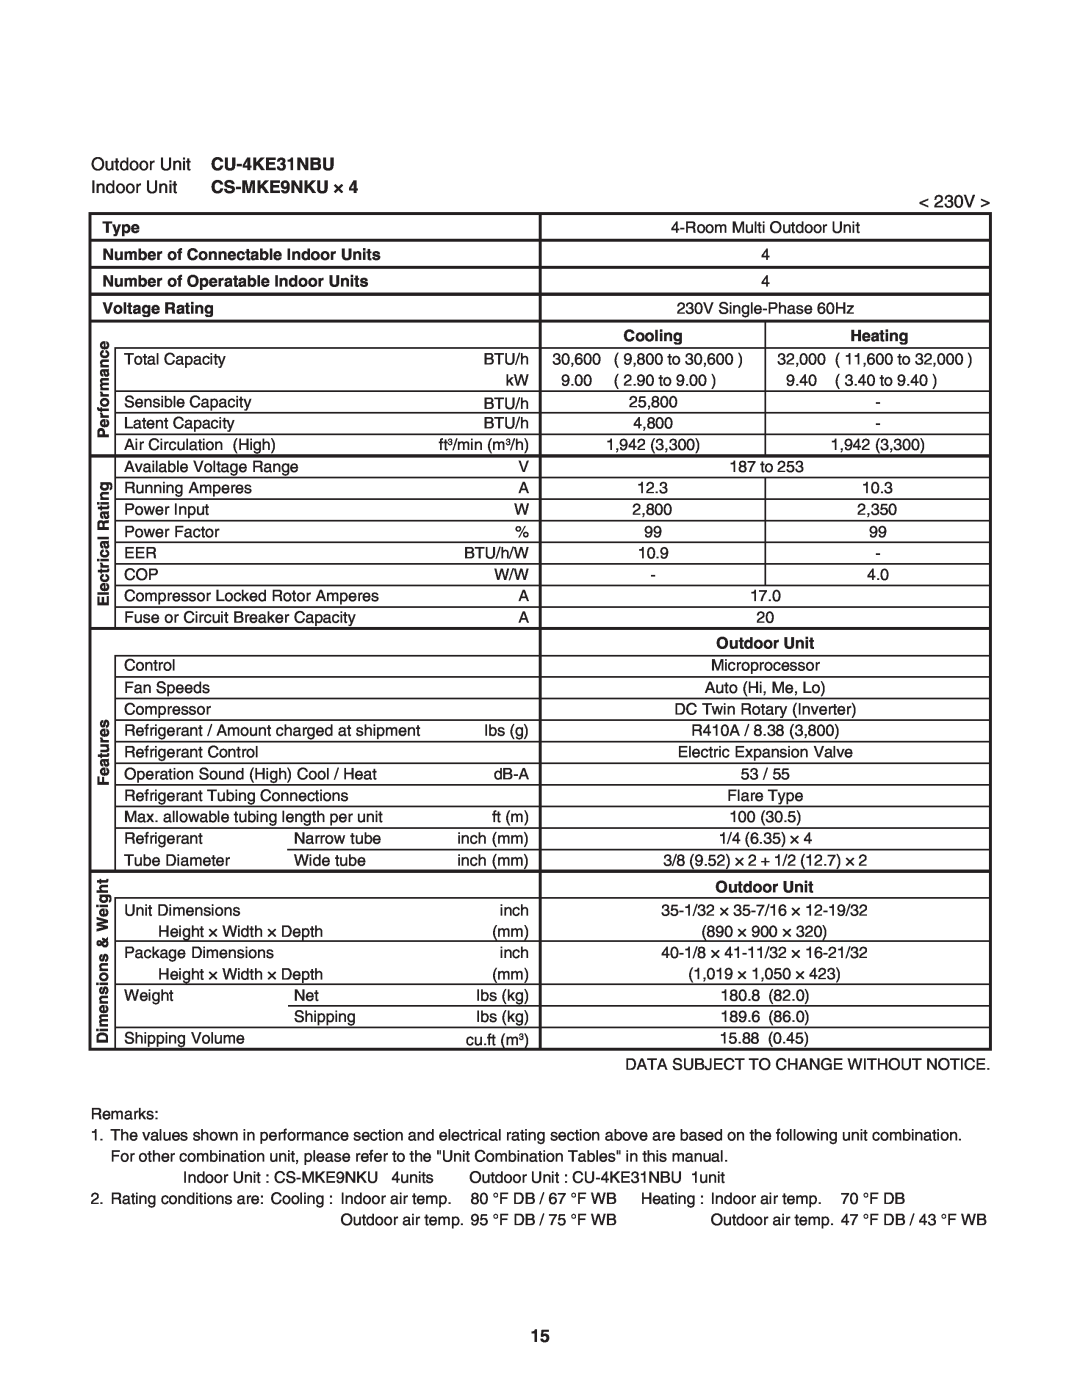 Panasonic CU-4KE31NBU Type, Number of Connectable Indoor Units, Number of Operatable Indoor Units, Voltage Rating, Cooling 